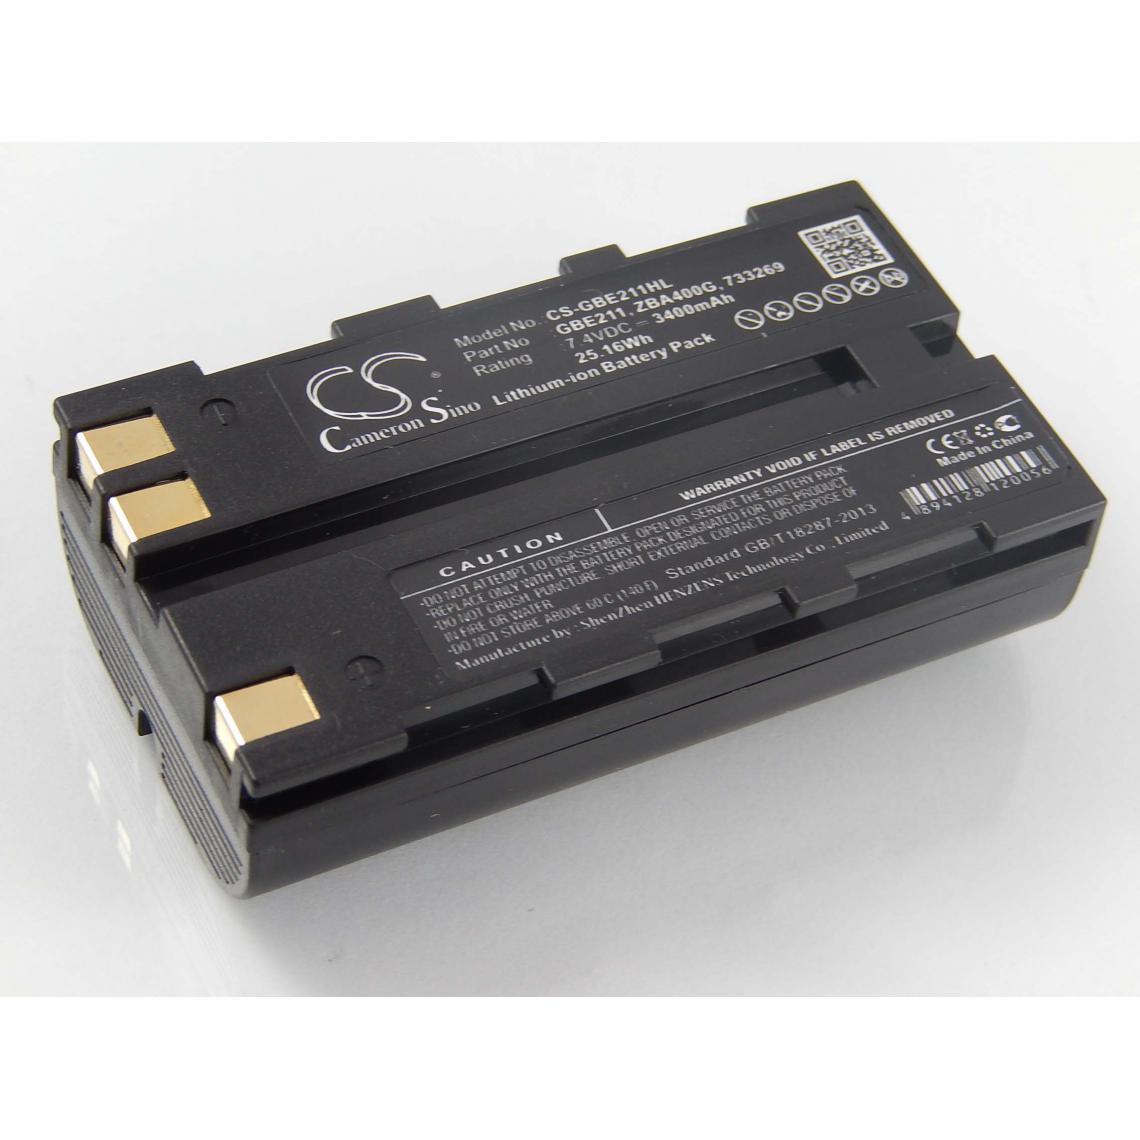 Vhbw - vhbw Batterie compatible avec Leica TS16 dispositif de mesure laser, outil de mesure (3400mAh, 7,4V, Li-ion) - Piles rechargeables